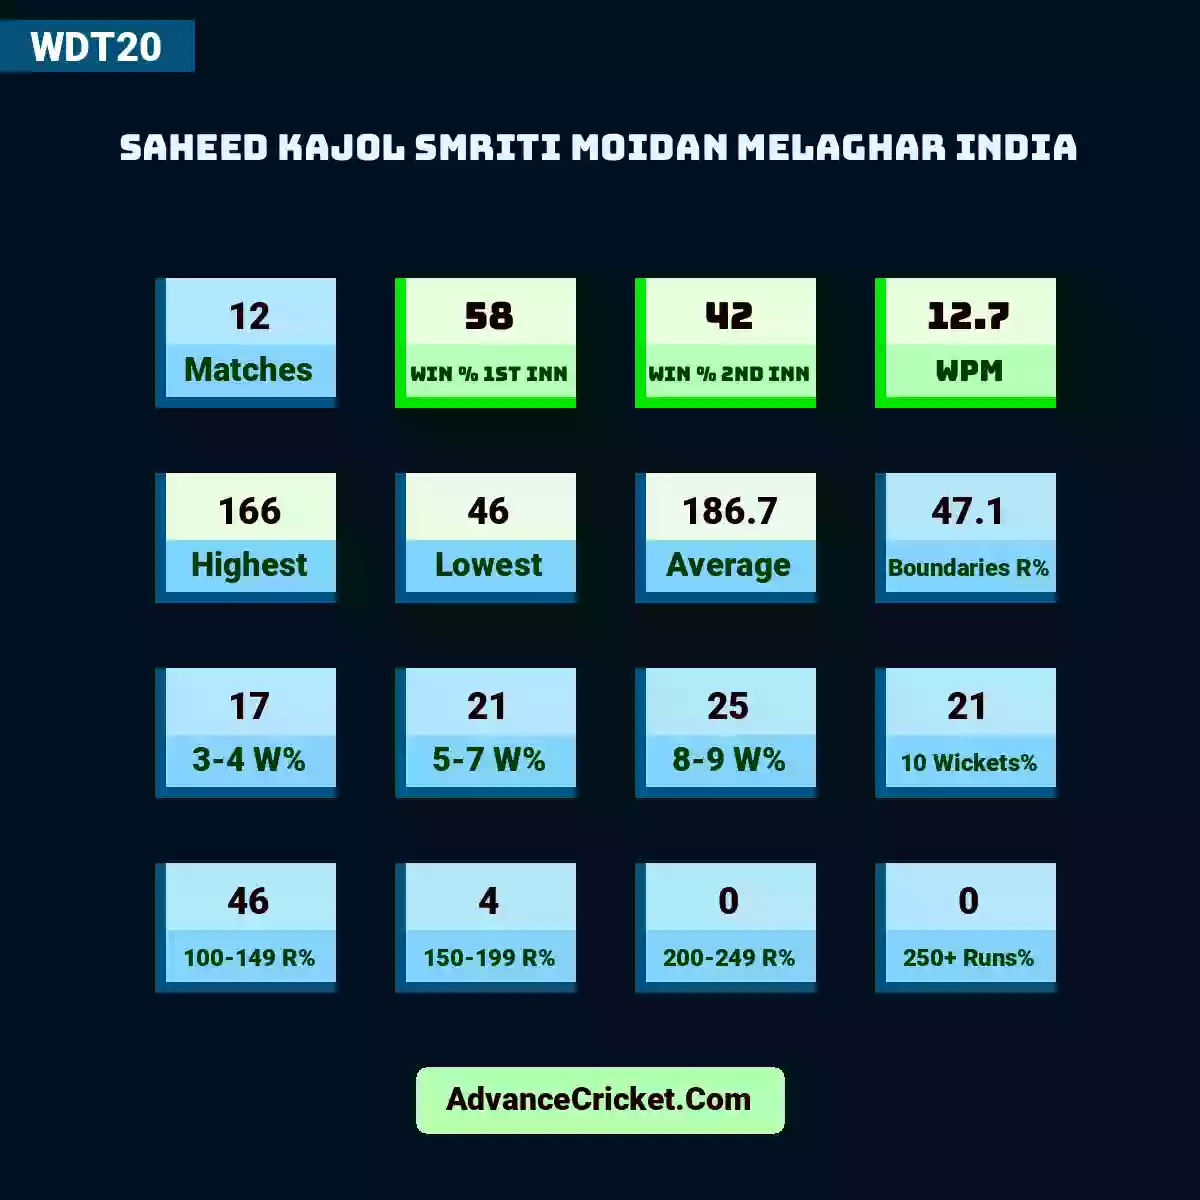 Image showing Saheed Kajol Smriti Moidan Melaghar India with Matches: 12, Win % 1st Inn: 58, Win % 2nd Inn: 42, WPM: 12.7, Highest: 166, Lowest: 46, Average: 186.7, Boundaries R%: 47.1, 3-4 W%: 17, 5-7 W%: 21, 8-9 W%: 25, 10 Wickets%: 21, 100-149 R%: 46, 150-199 R%: 4, 200-249 R%: 0, 250+ Runs%: 0.